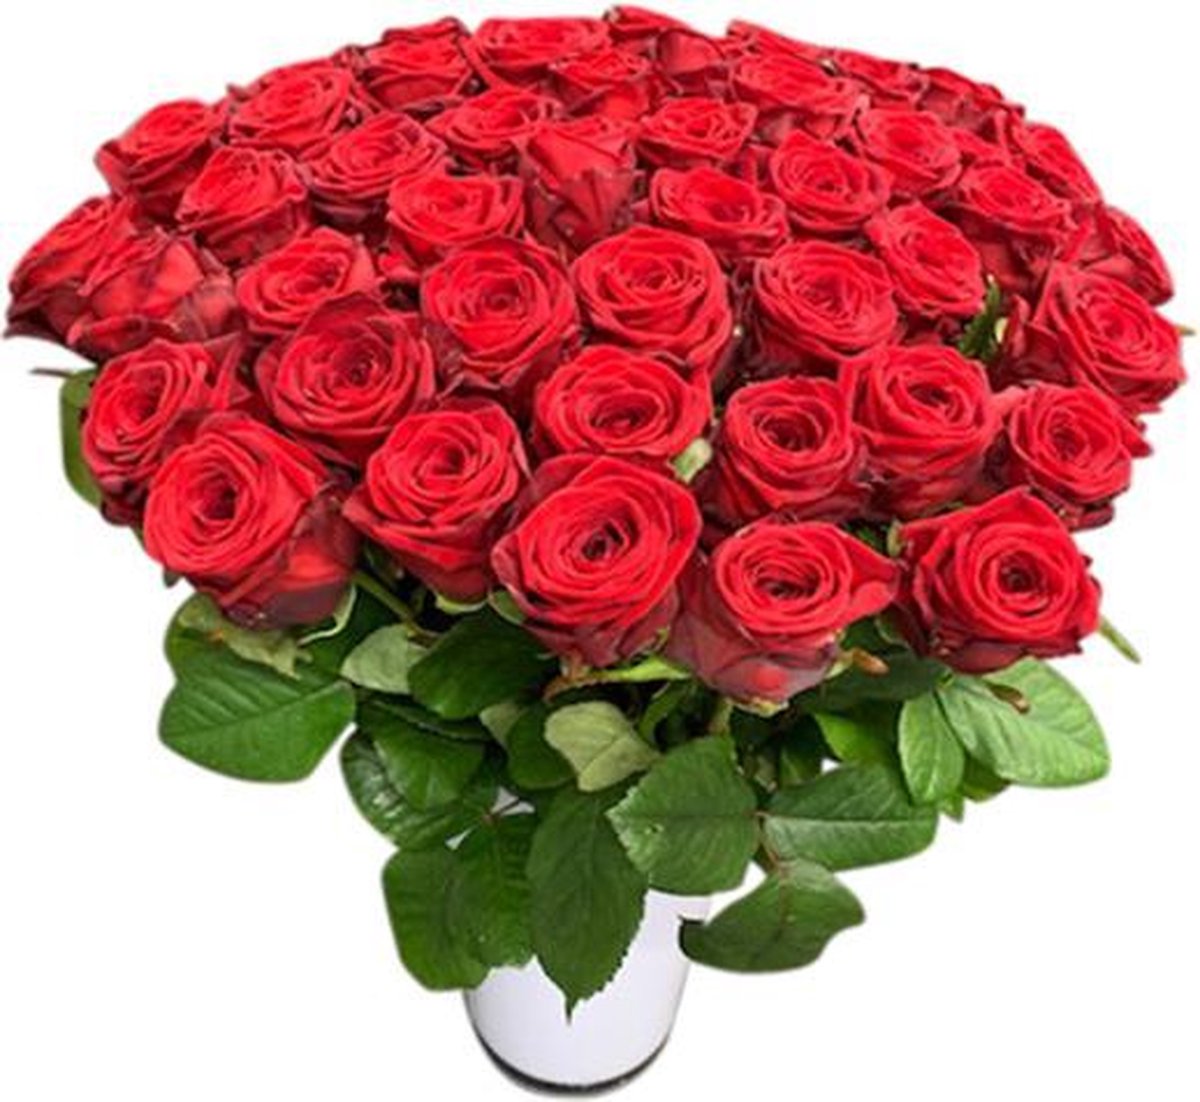 60 rode rozen in vaas | bol.com